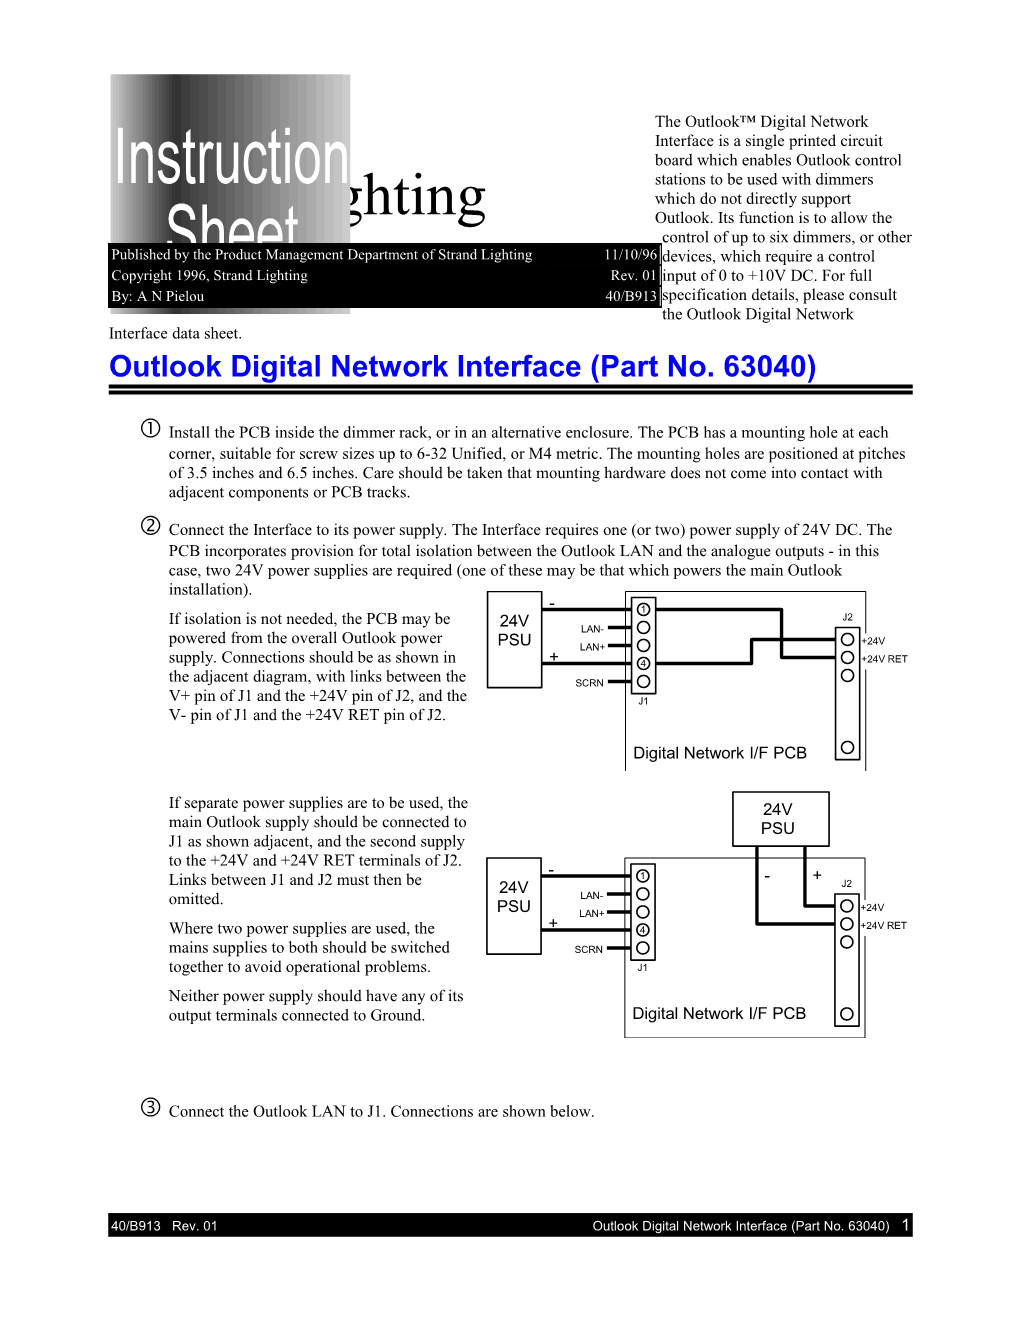 Outlook Digital Network Interface (Part No. 63040)